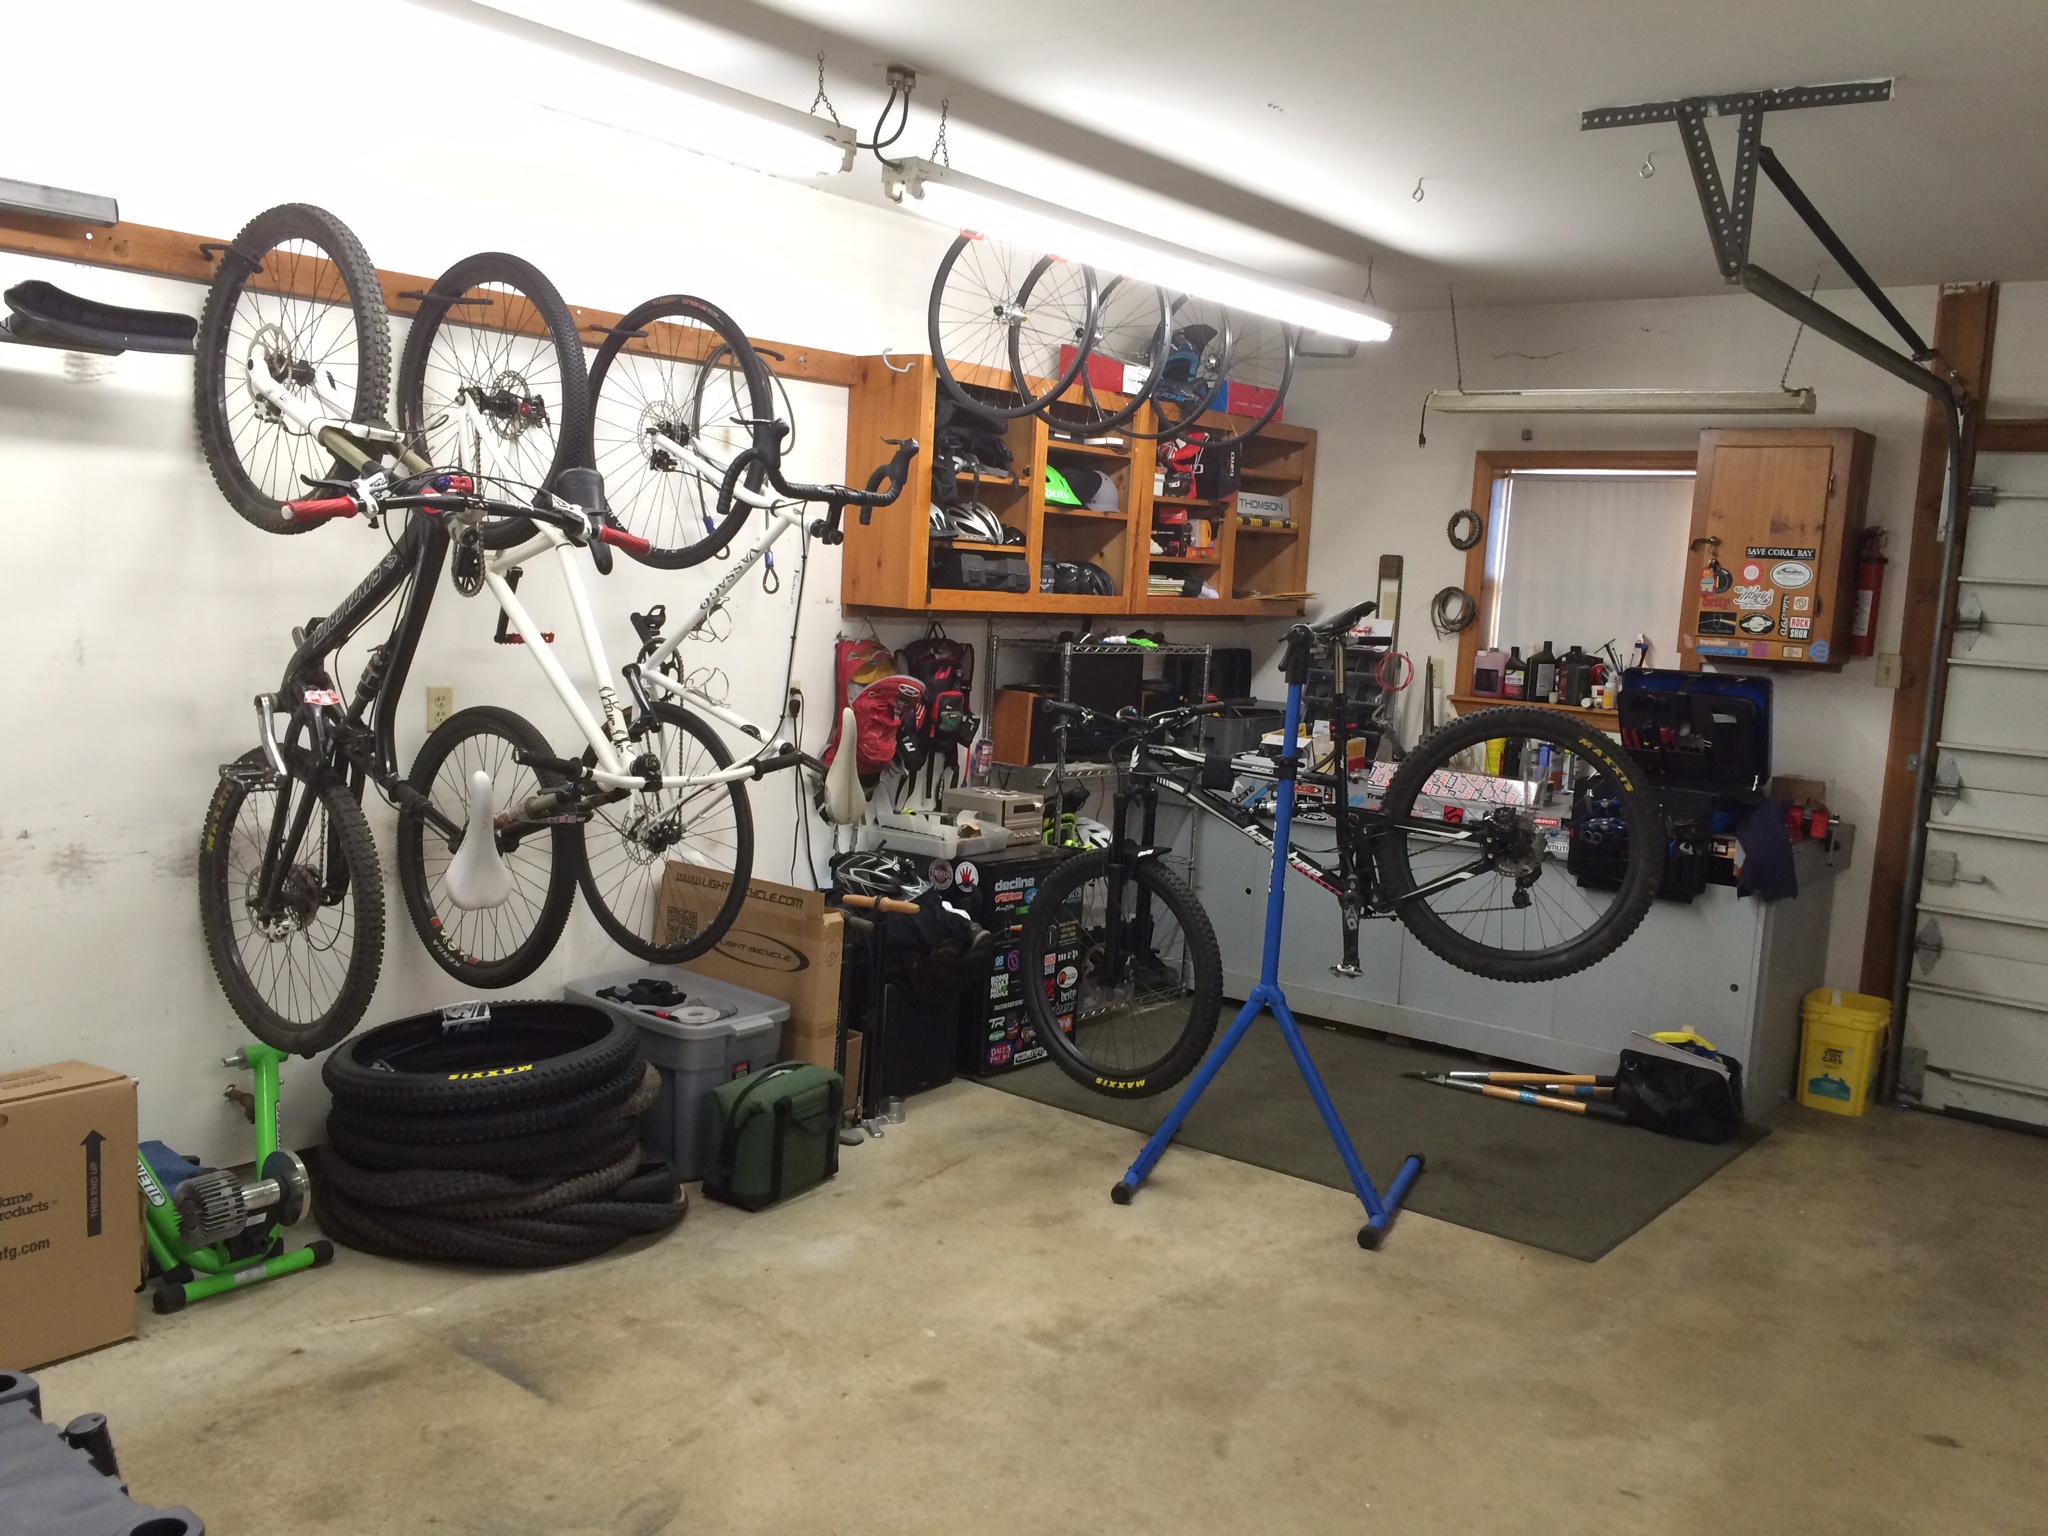 Bike Storage At Home Garage Shed Ideas Ridemonkey Forums